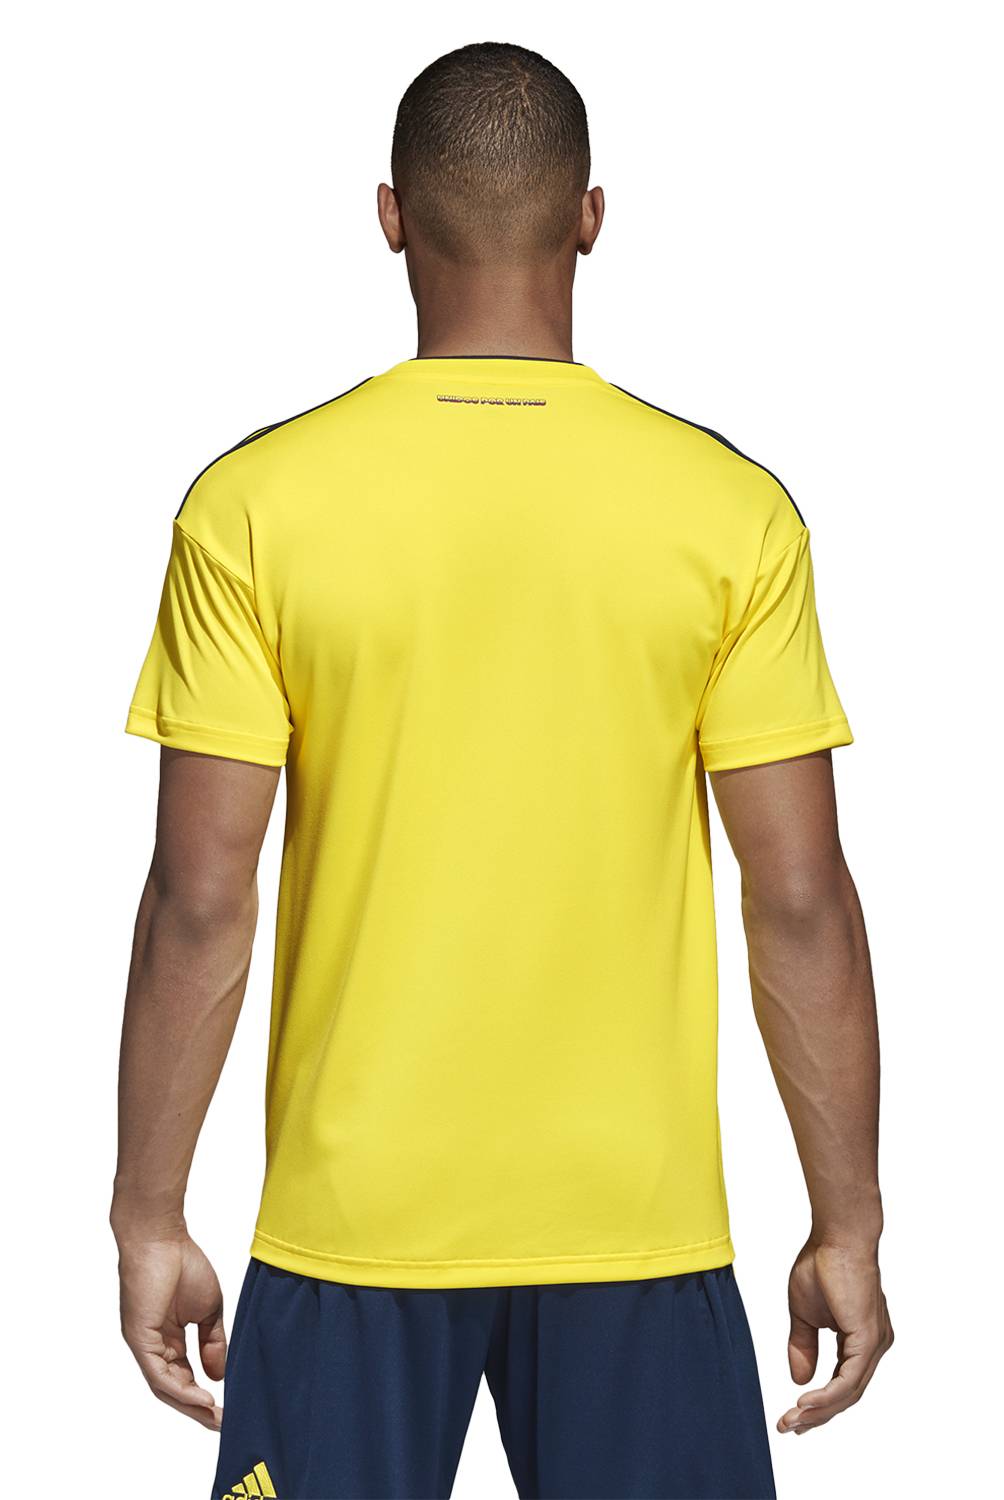 adidas - Camiseta Selección Colombia